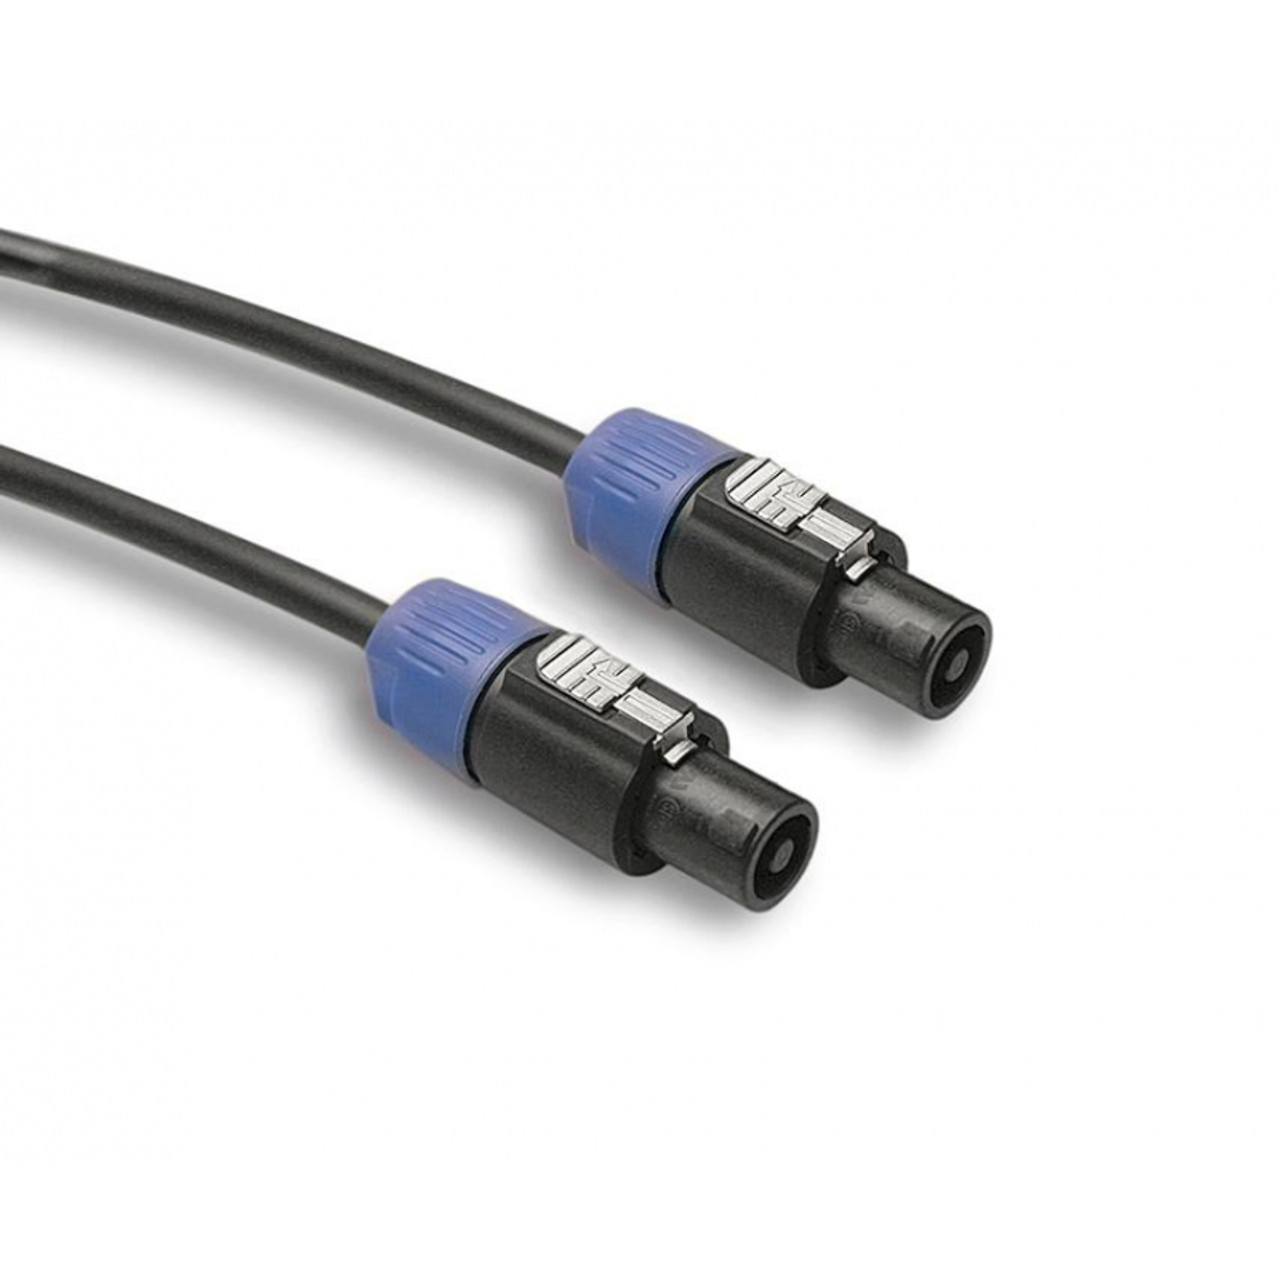 Speaker Cable Kit - 100 or 200 Ft with Neutrik® Speakon® Connectors